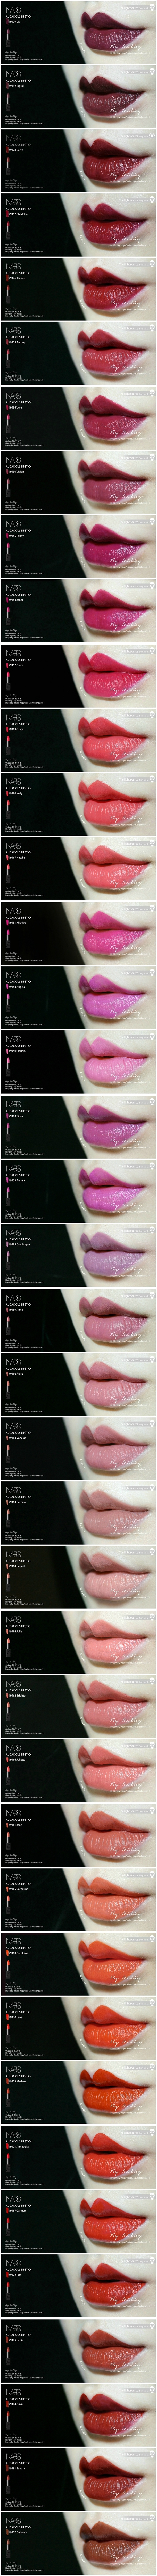 NARS唇膏 2014 Audacious Lipstick 全系列40色试色 